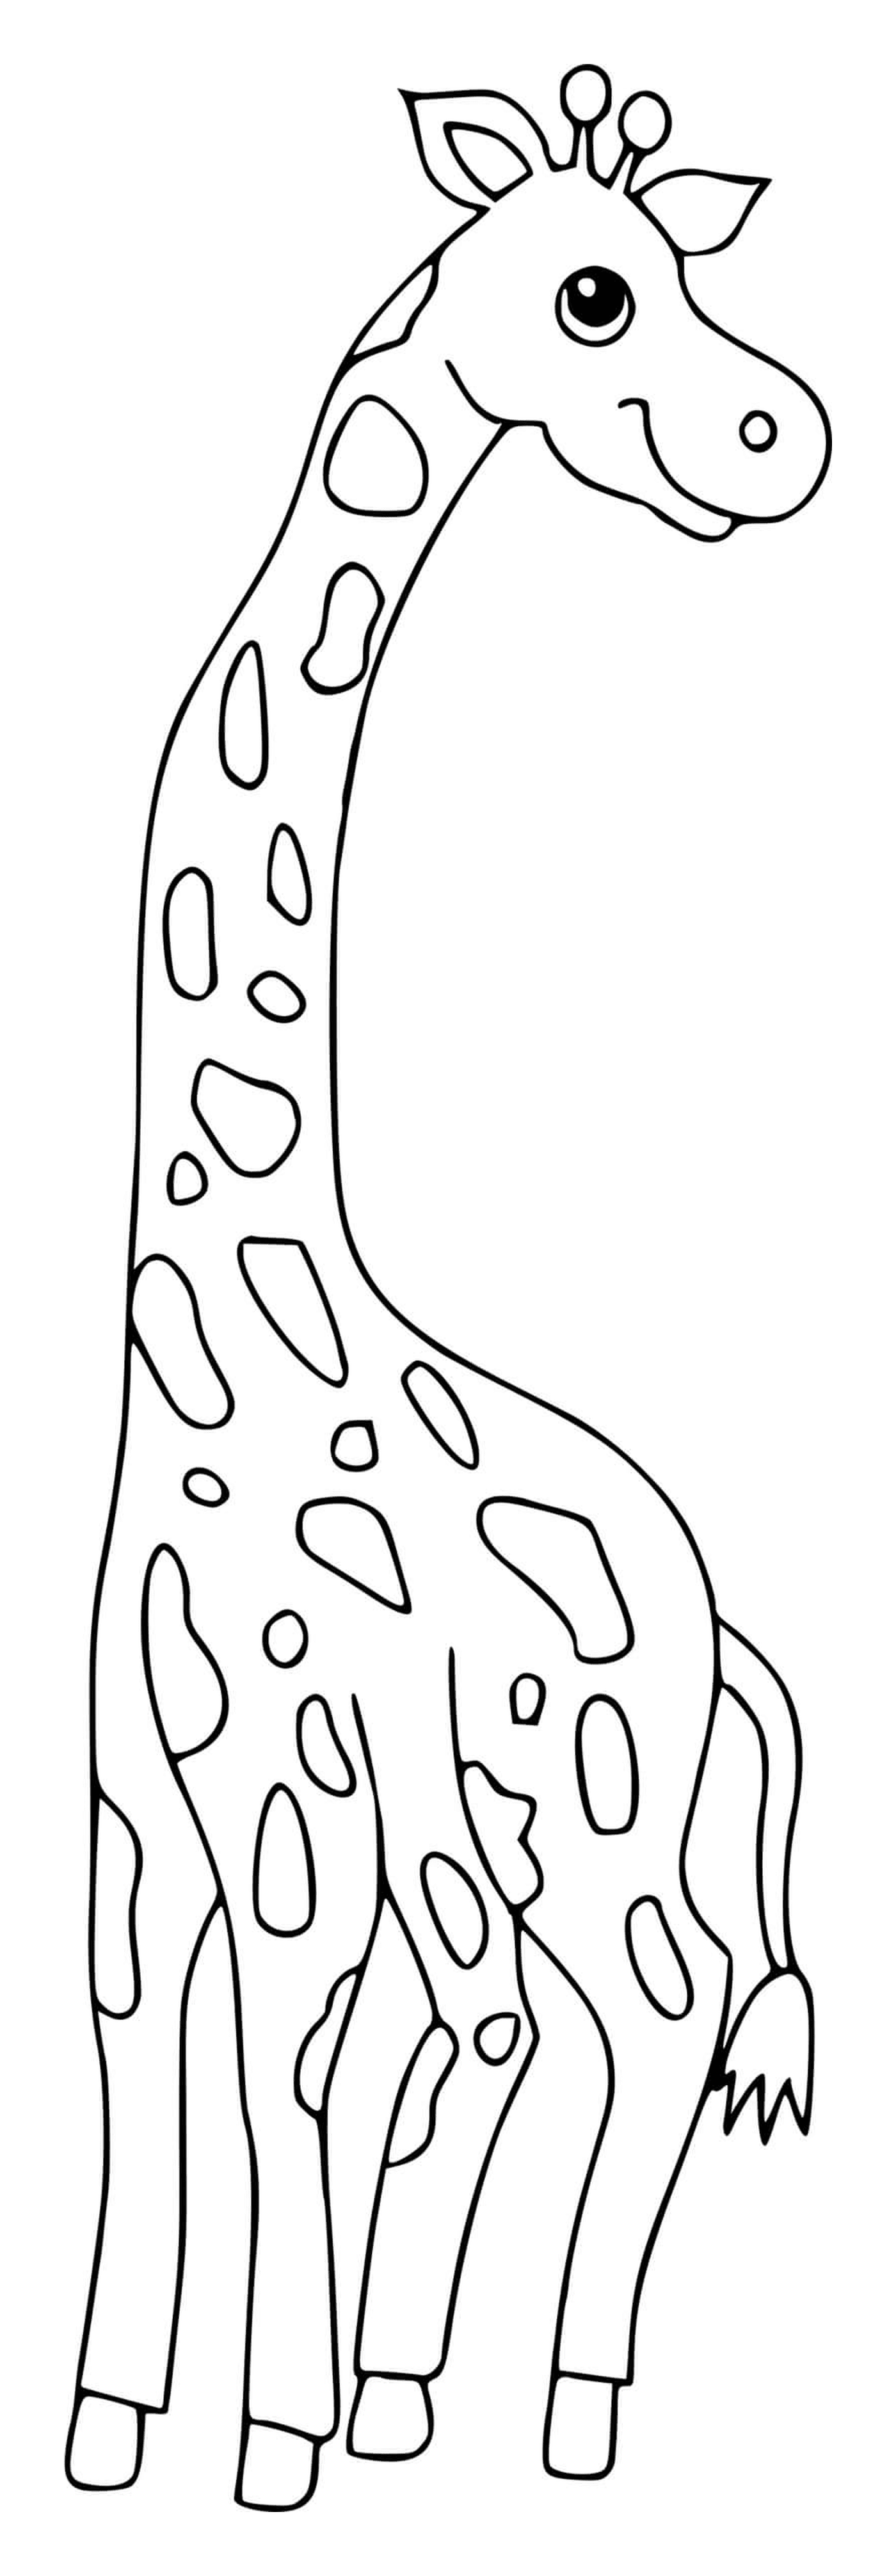  Una gran y majestuosa jirafa 